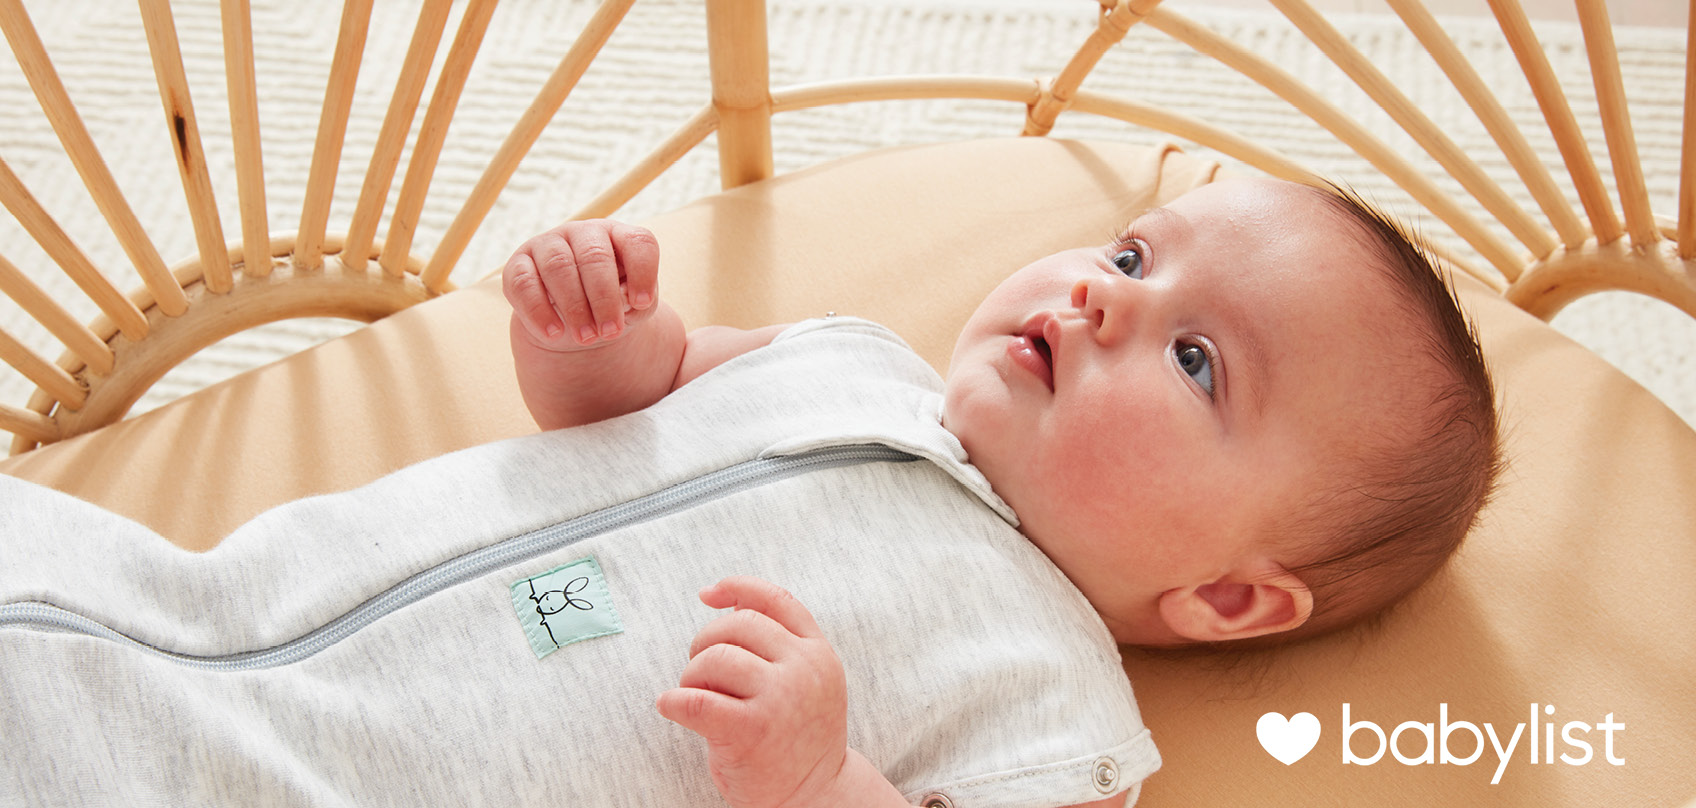 Baby sleeping bags are a practical baby registry item